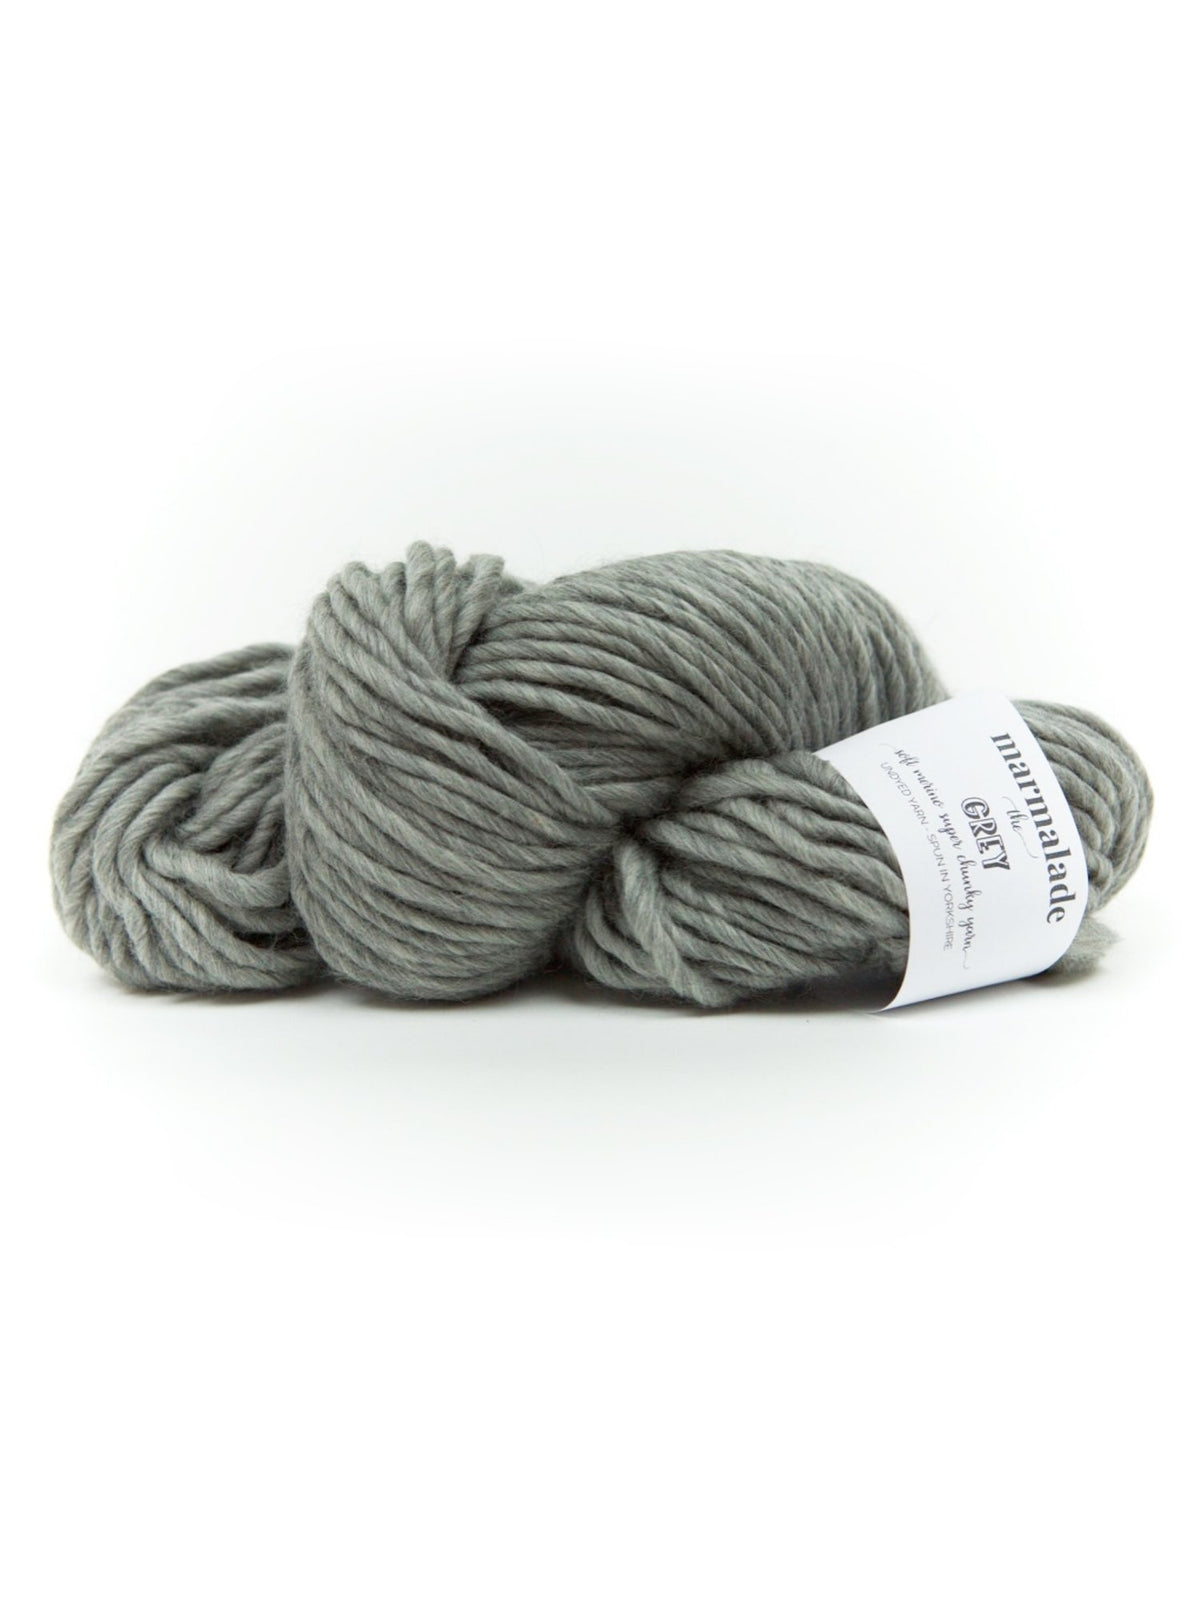 grey undyed merino chunky wool hank from marmalade